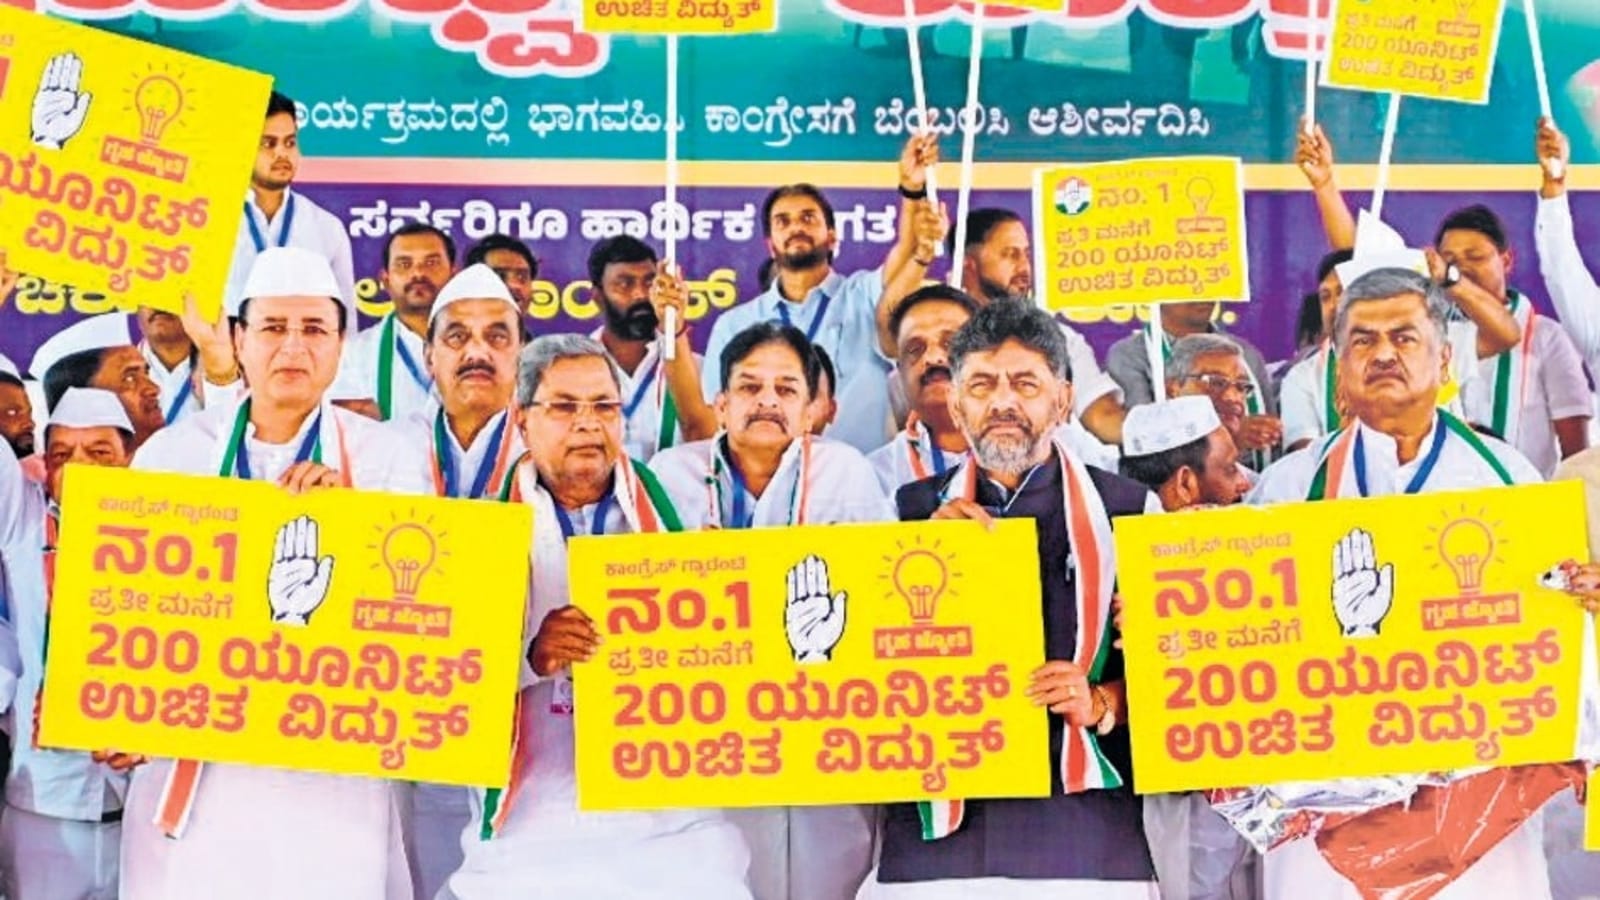 Congress promises 200 units free power in Karnataka Latest News India